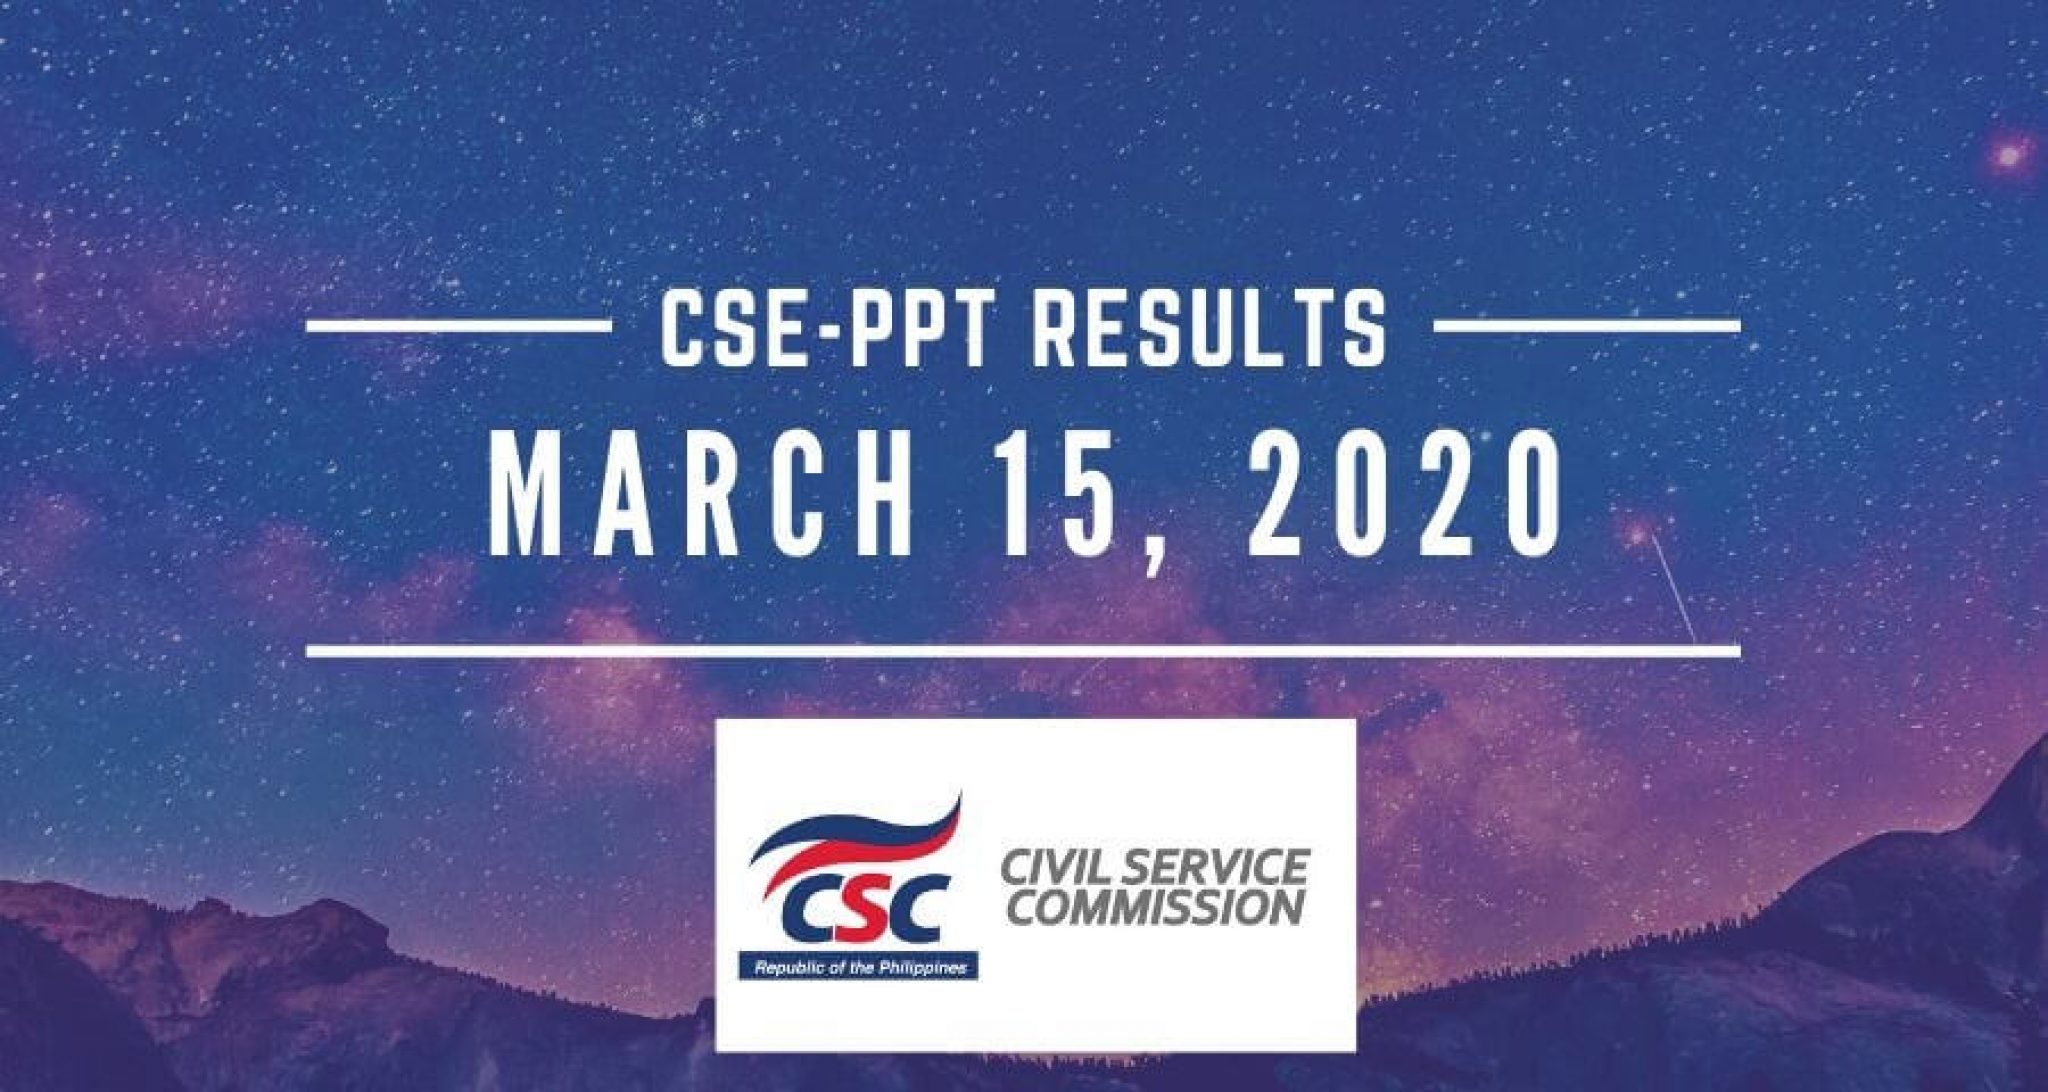 Civil Service Exam Results March 15, 2020 CSE Passers (Full List)